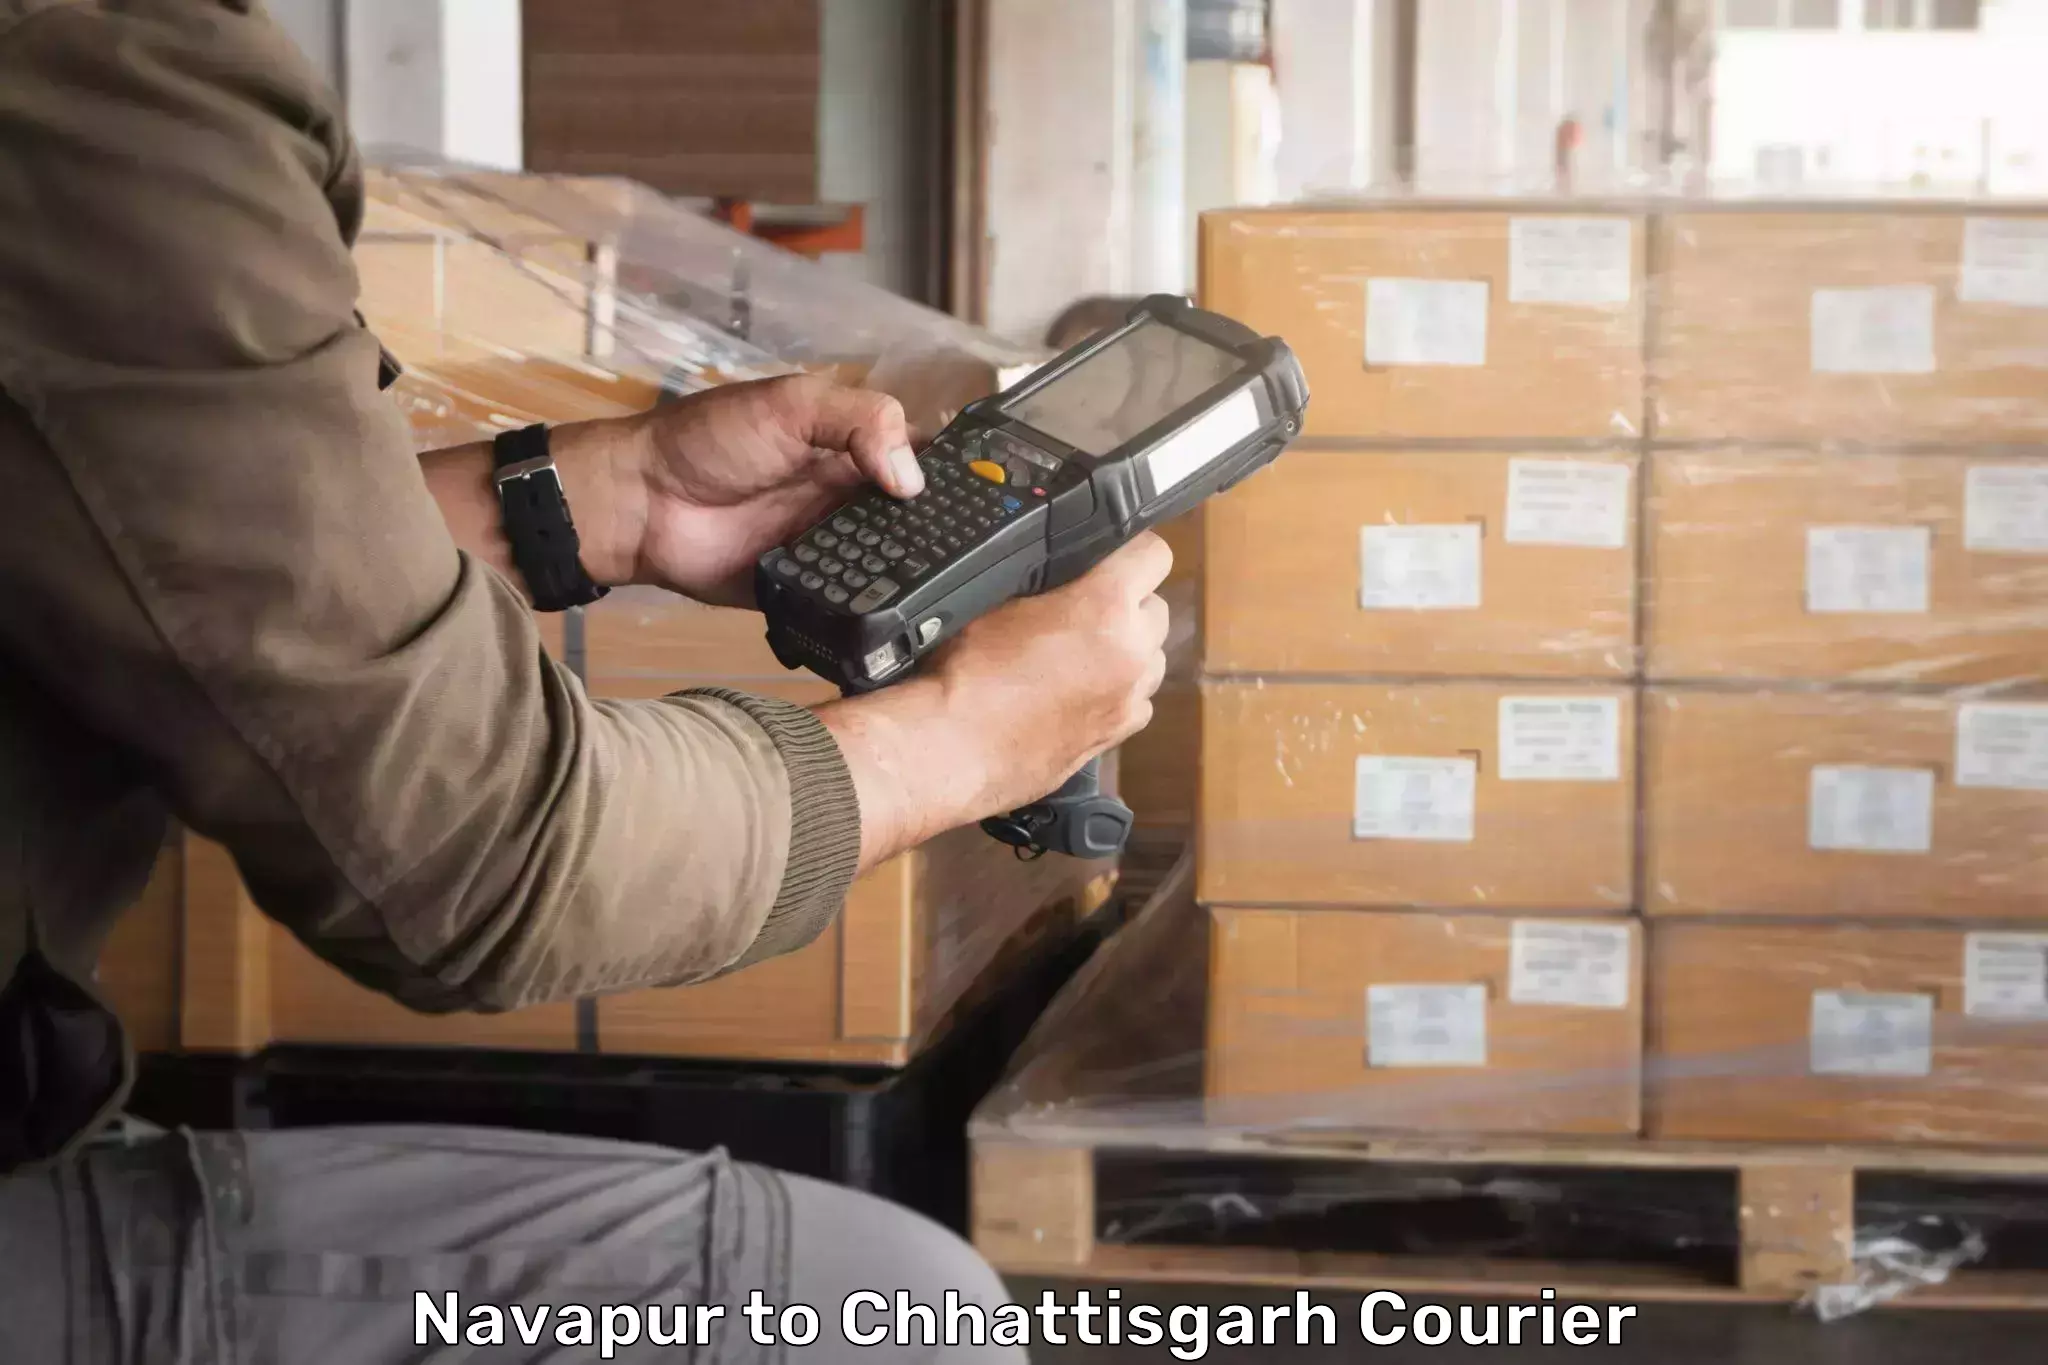 Specialized courier services in Navapur to Korea Chhattisgarh